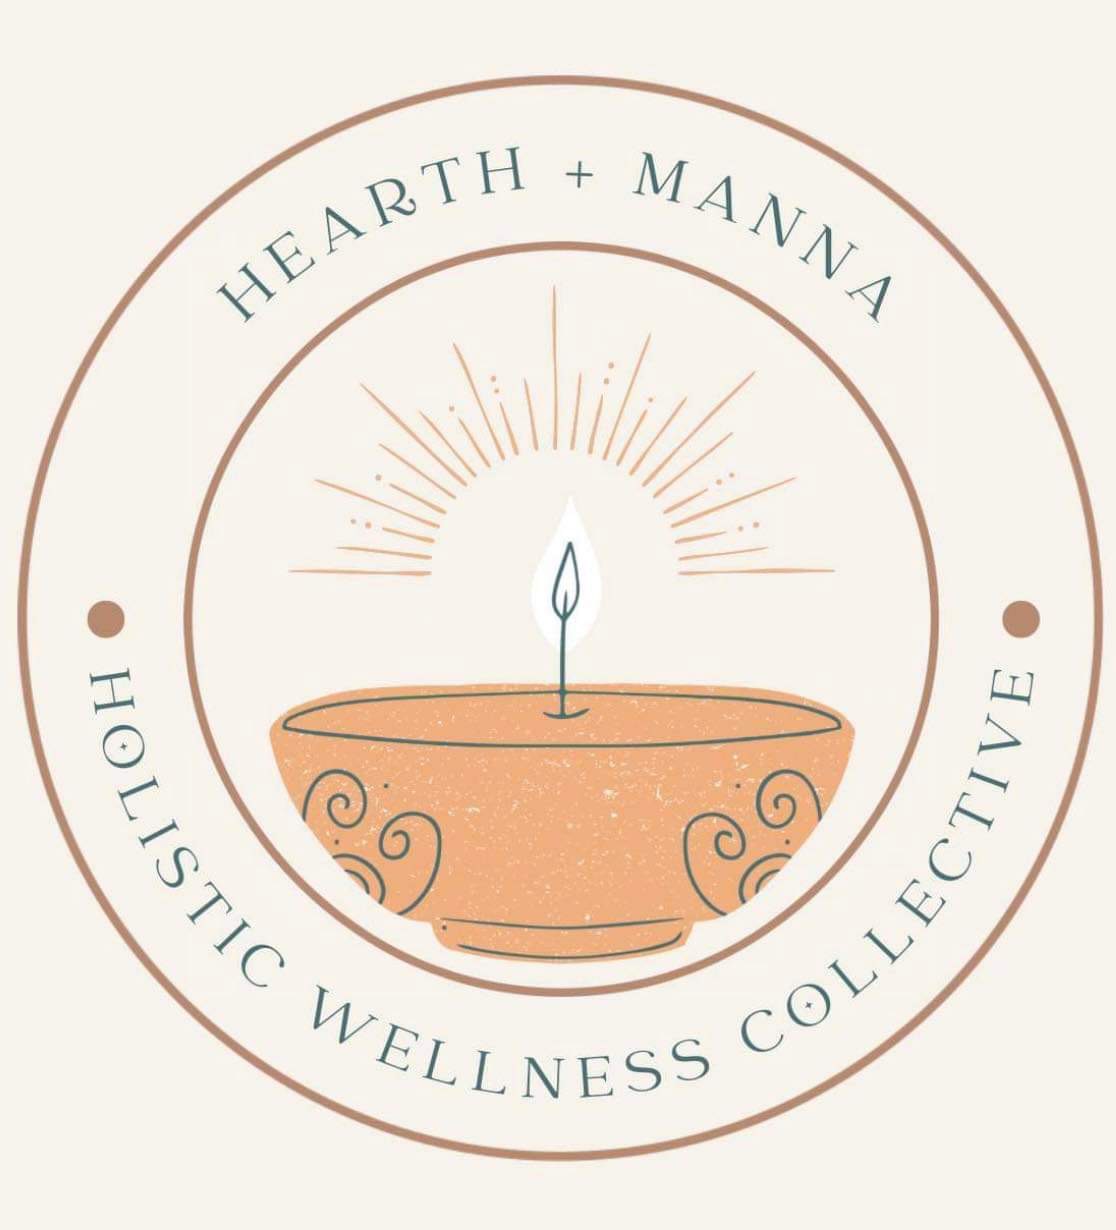 Hearth + Manna Wellness Collective